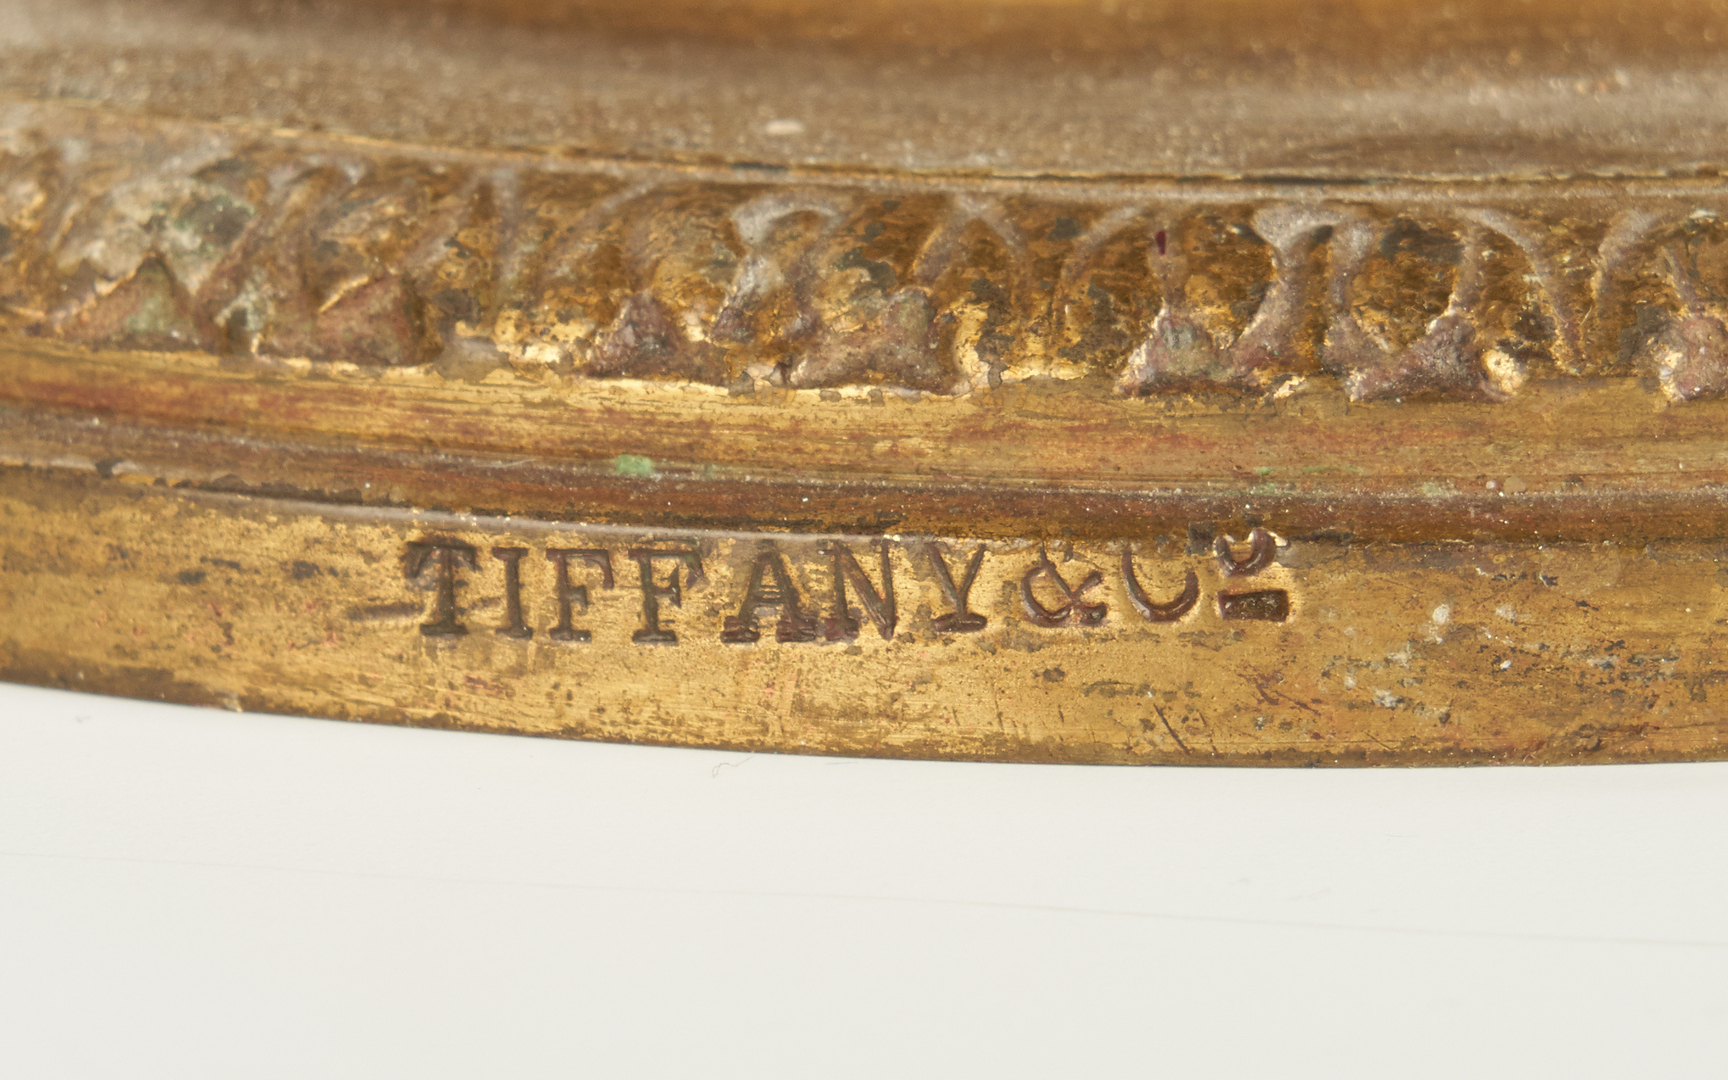 Lot 475: Tiffany  "Aladdin Lamp", Pulled Feather Shade